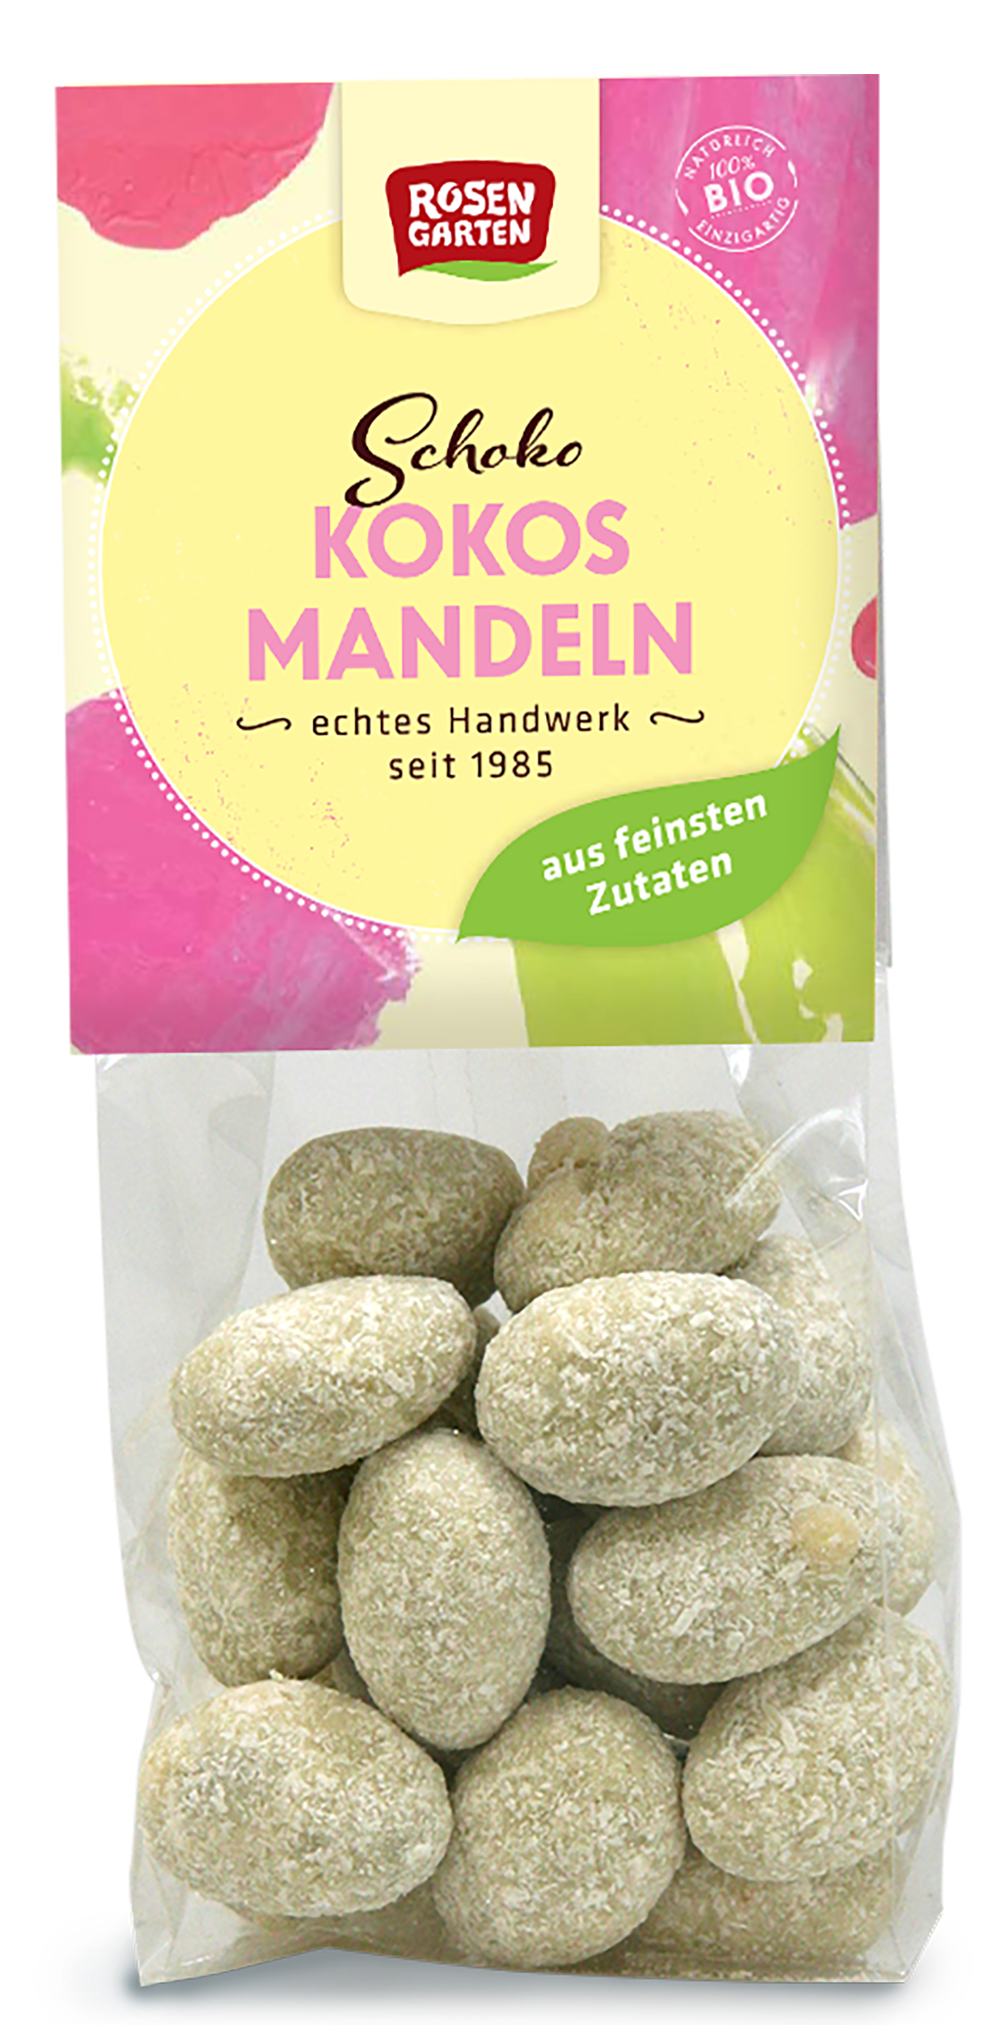 Rosengarten Schoko Kokos-Mandeln 100g/S